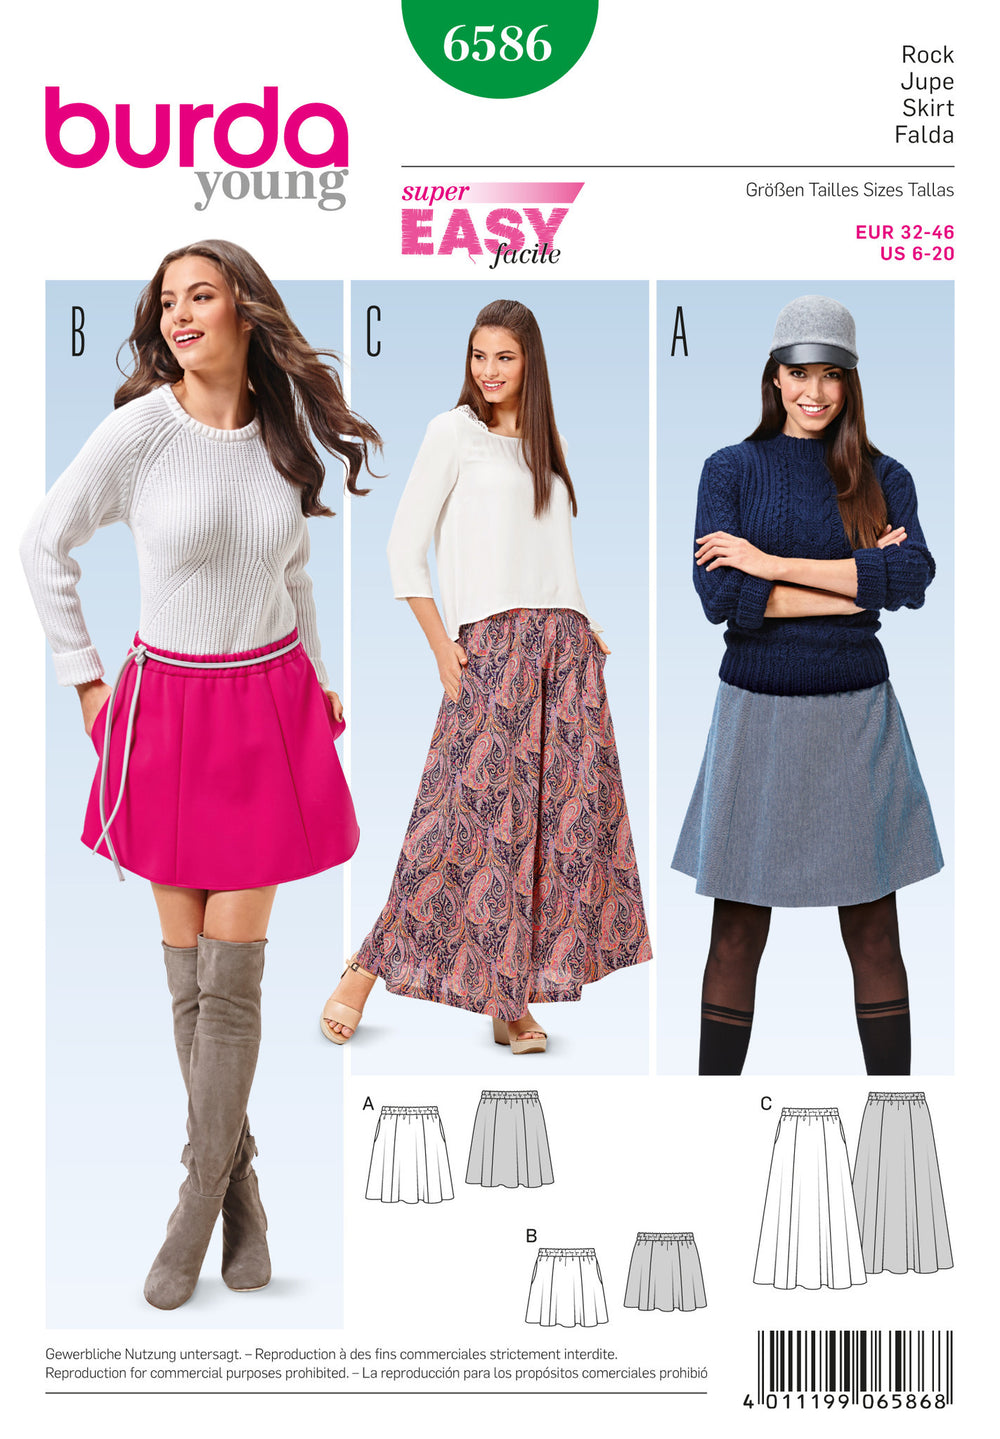 BD6586 Burda Style Pattern 6586 Skirt from Jaycotts Sewing Supplies